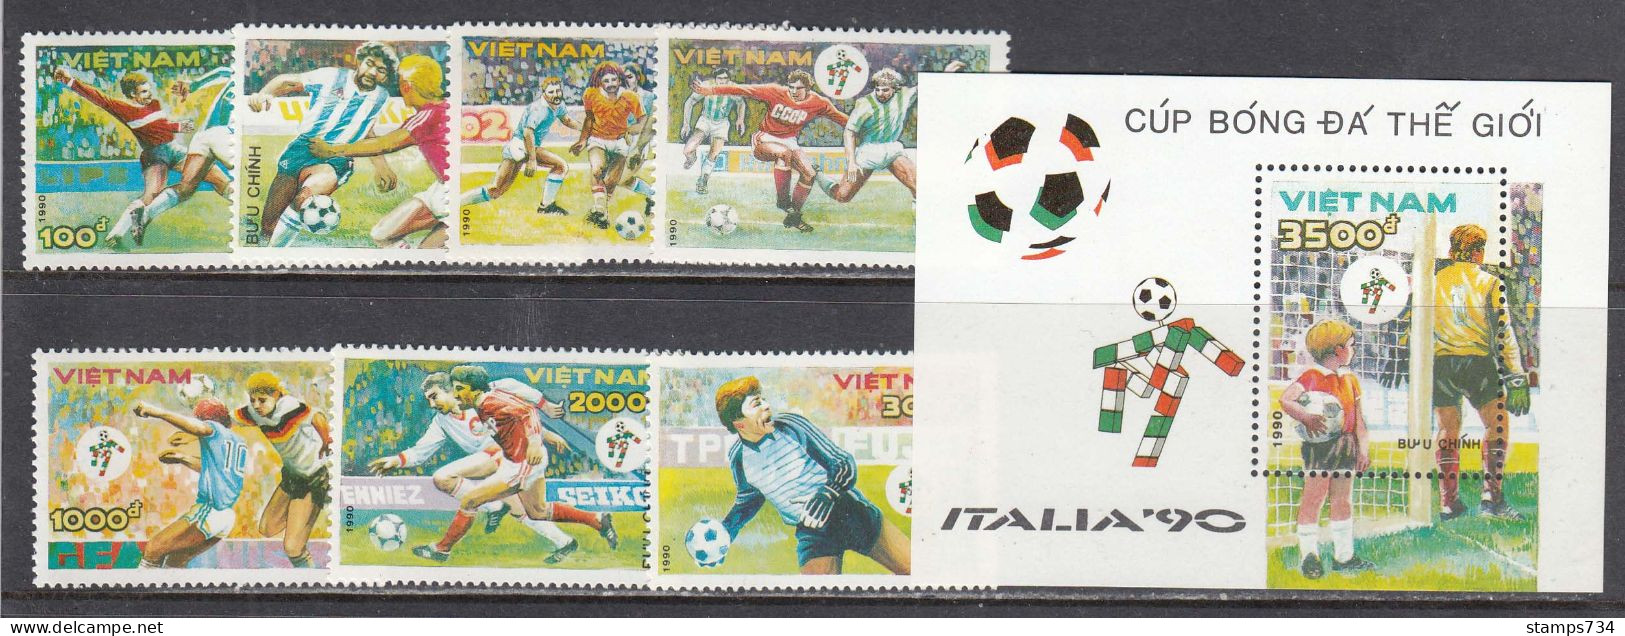 Vietnam 1990 - Coupe Monde De Football, Italia'90, Mi-Nr. 2152/58+Bl. 76, Dent., MNH** - Vietnam